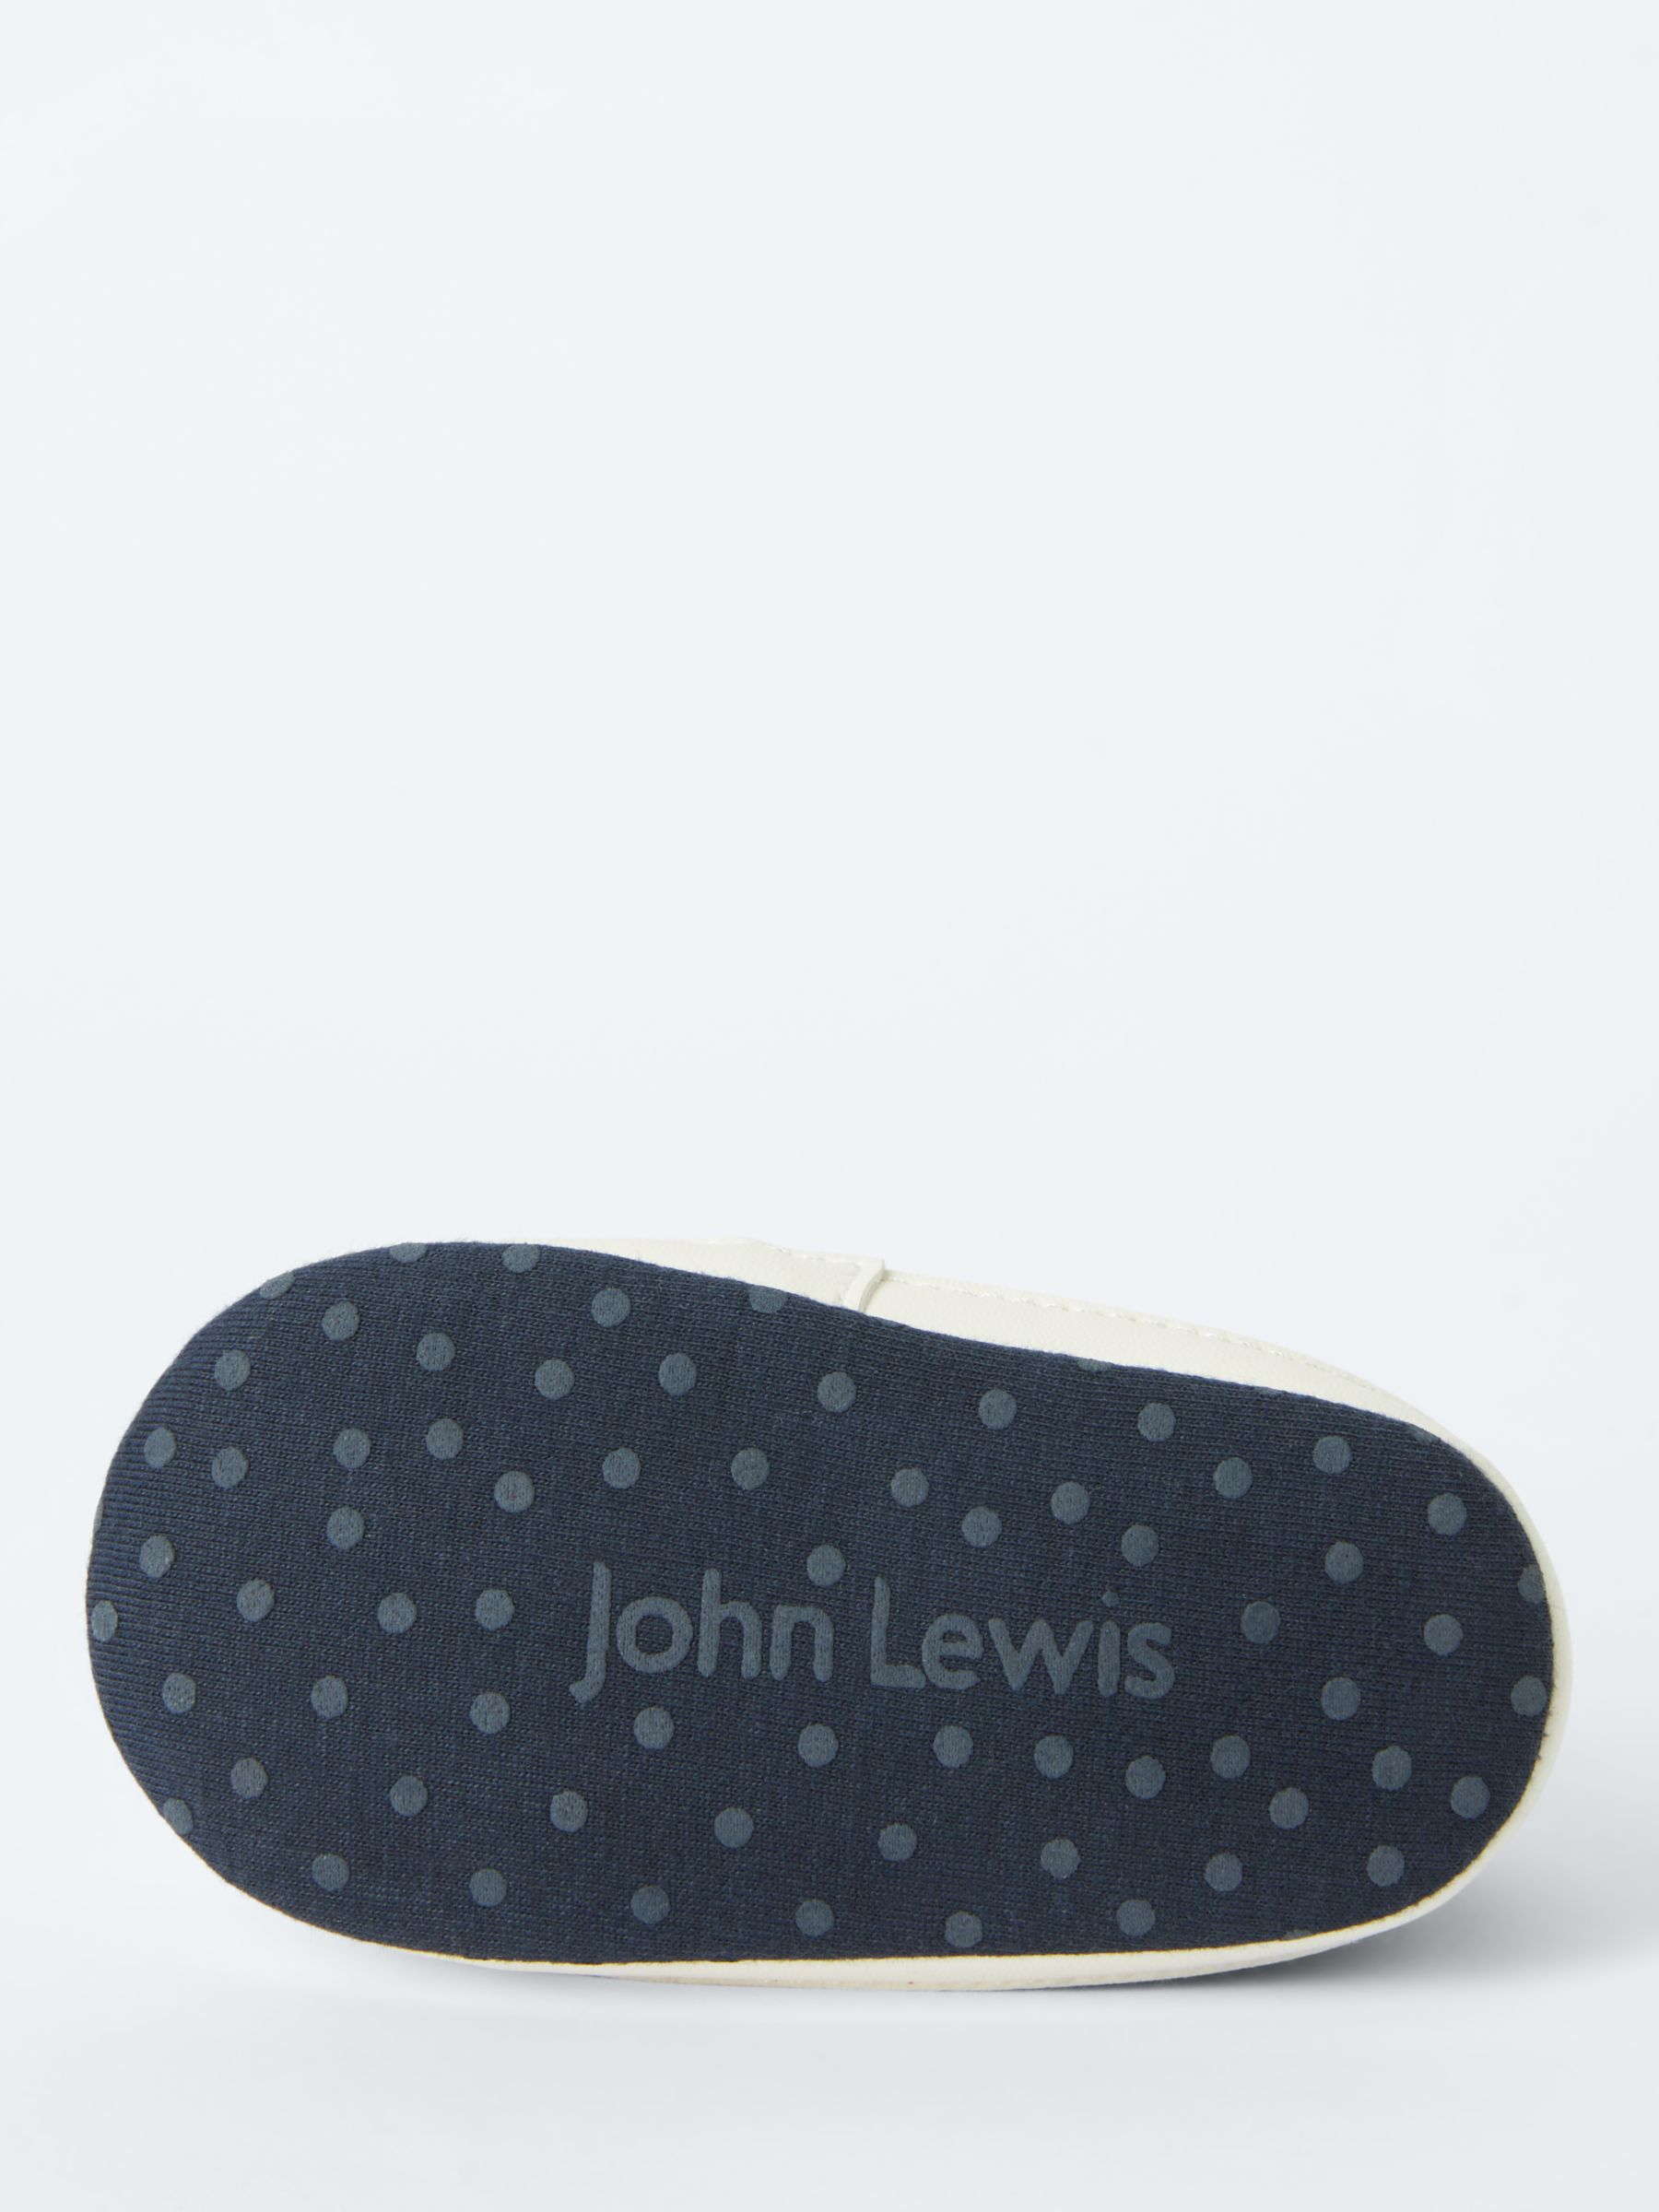 John Lewis Hi-Top Canvas Baby Booties, Charcoal, 0-3 months